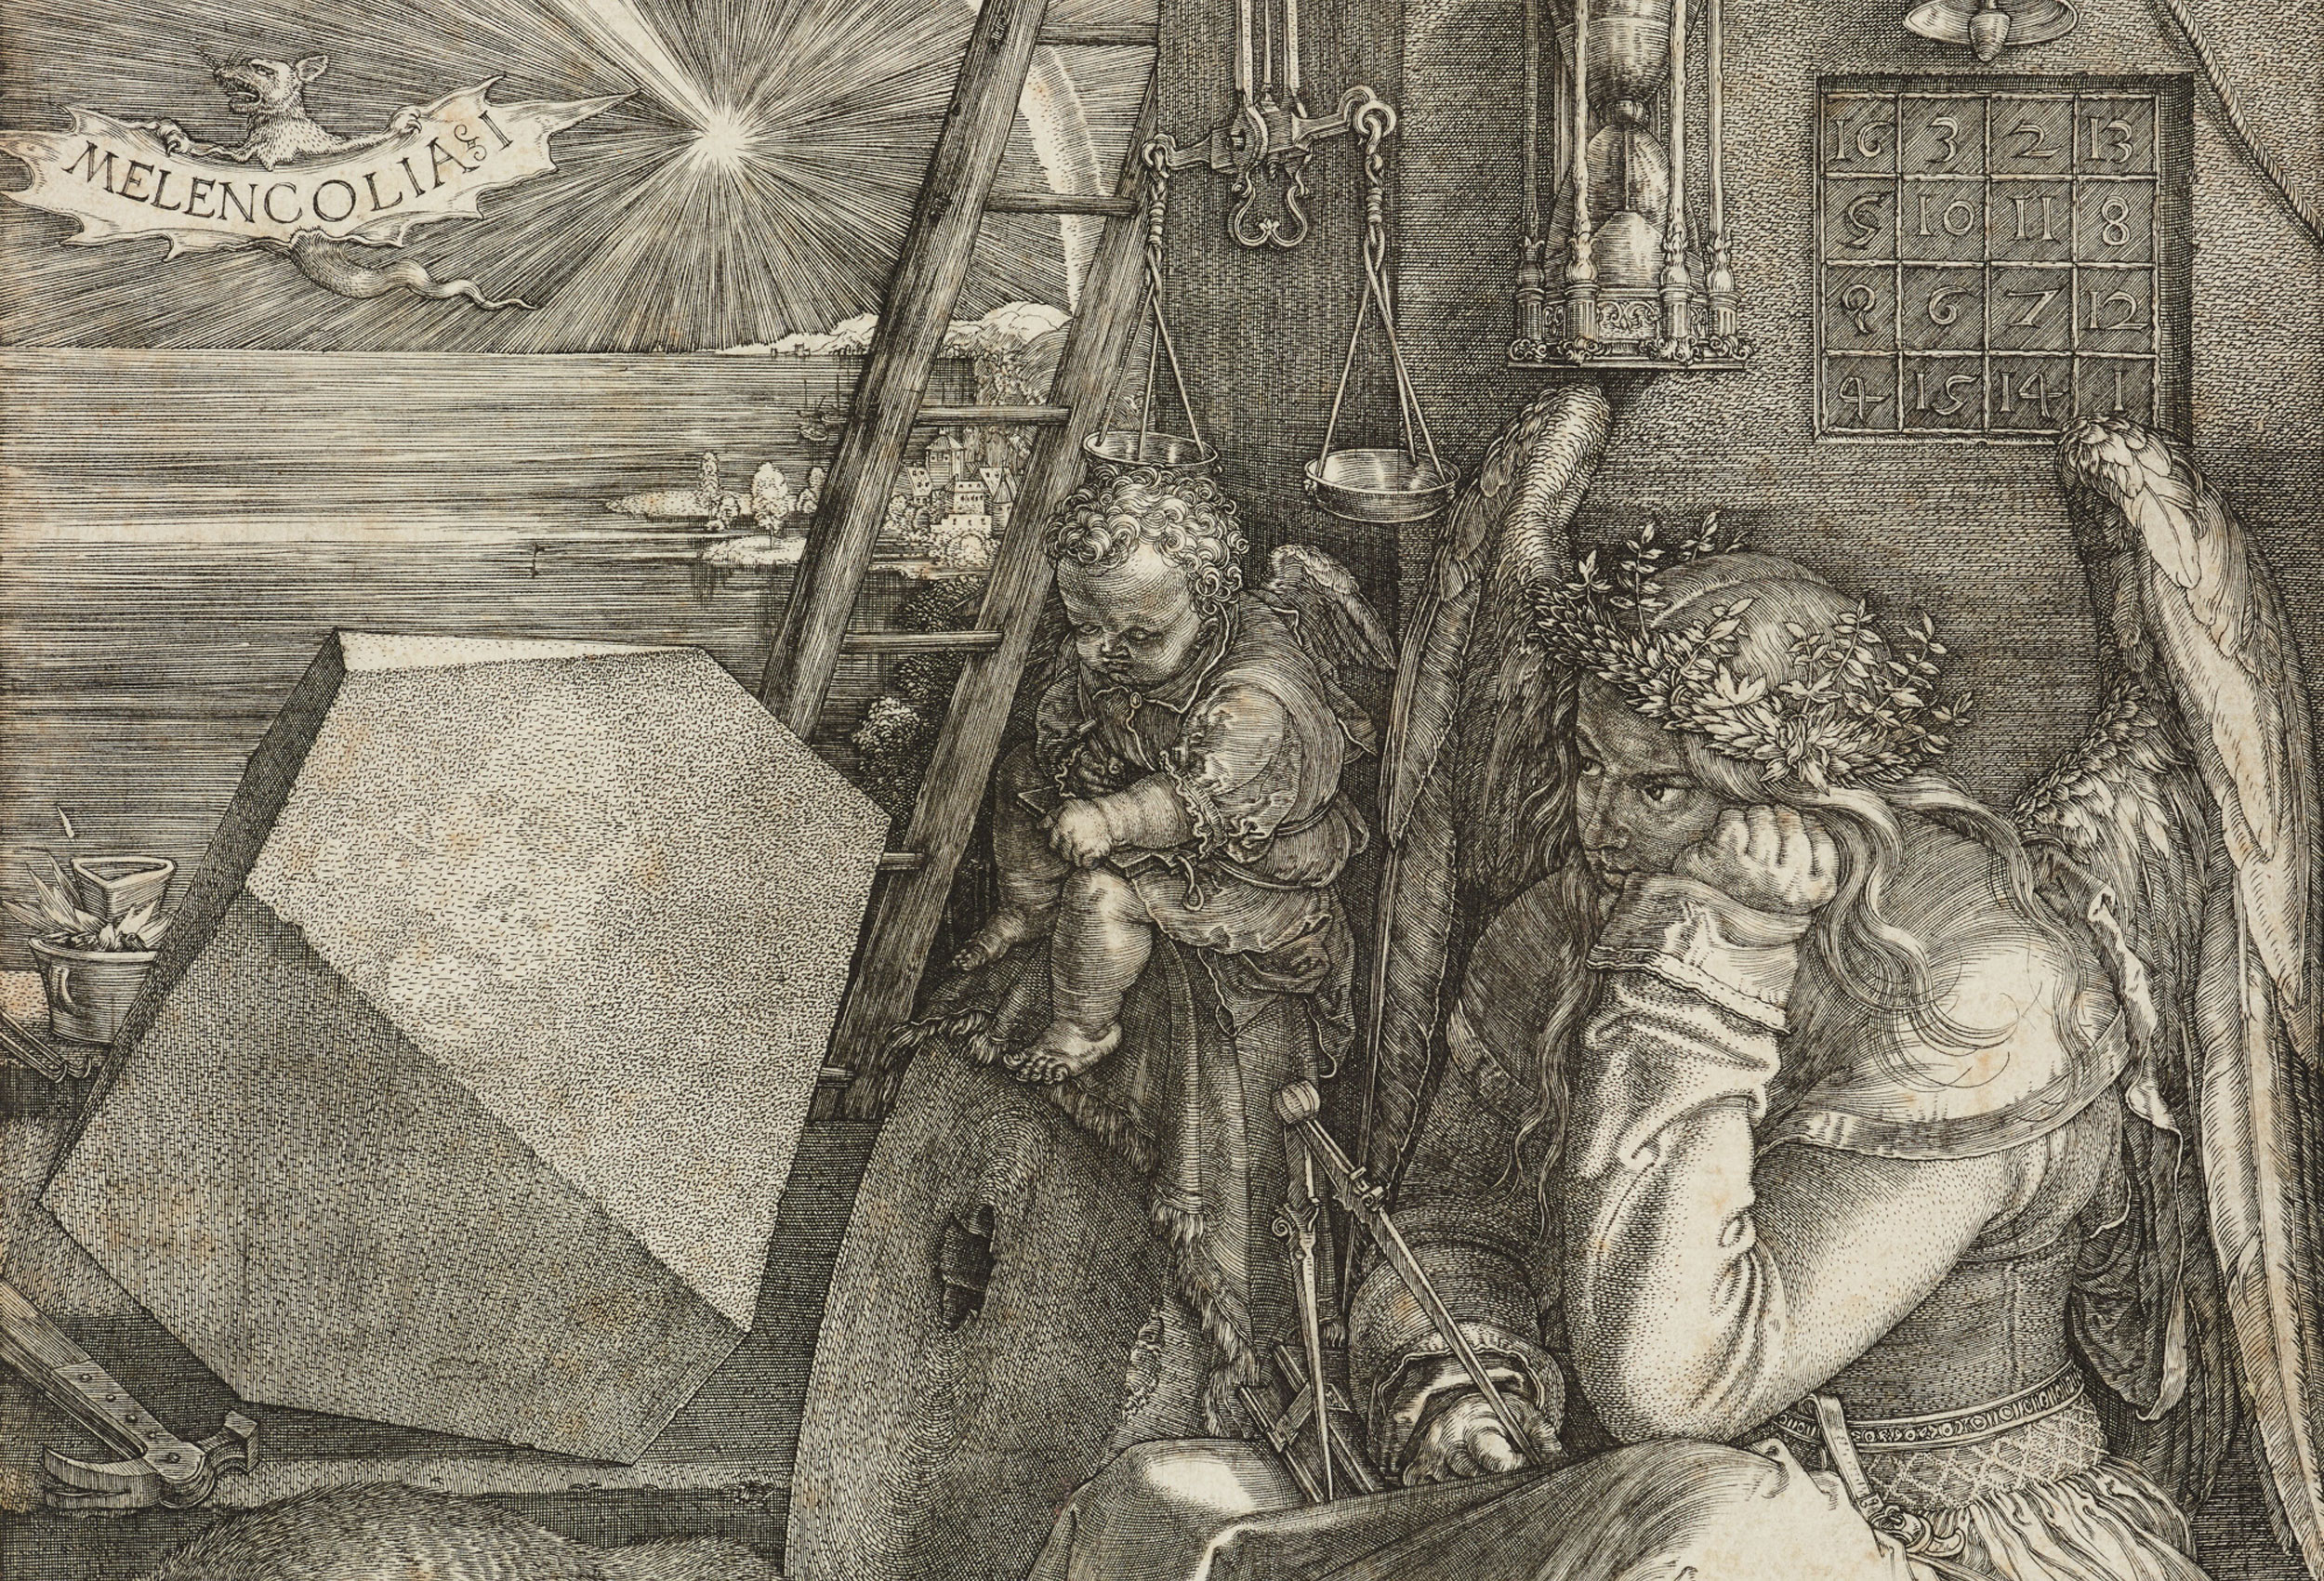 Albrecht Dürer Melencolia I 1514 (detail), Art Gallery of New South Wales